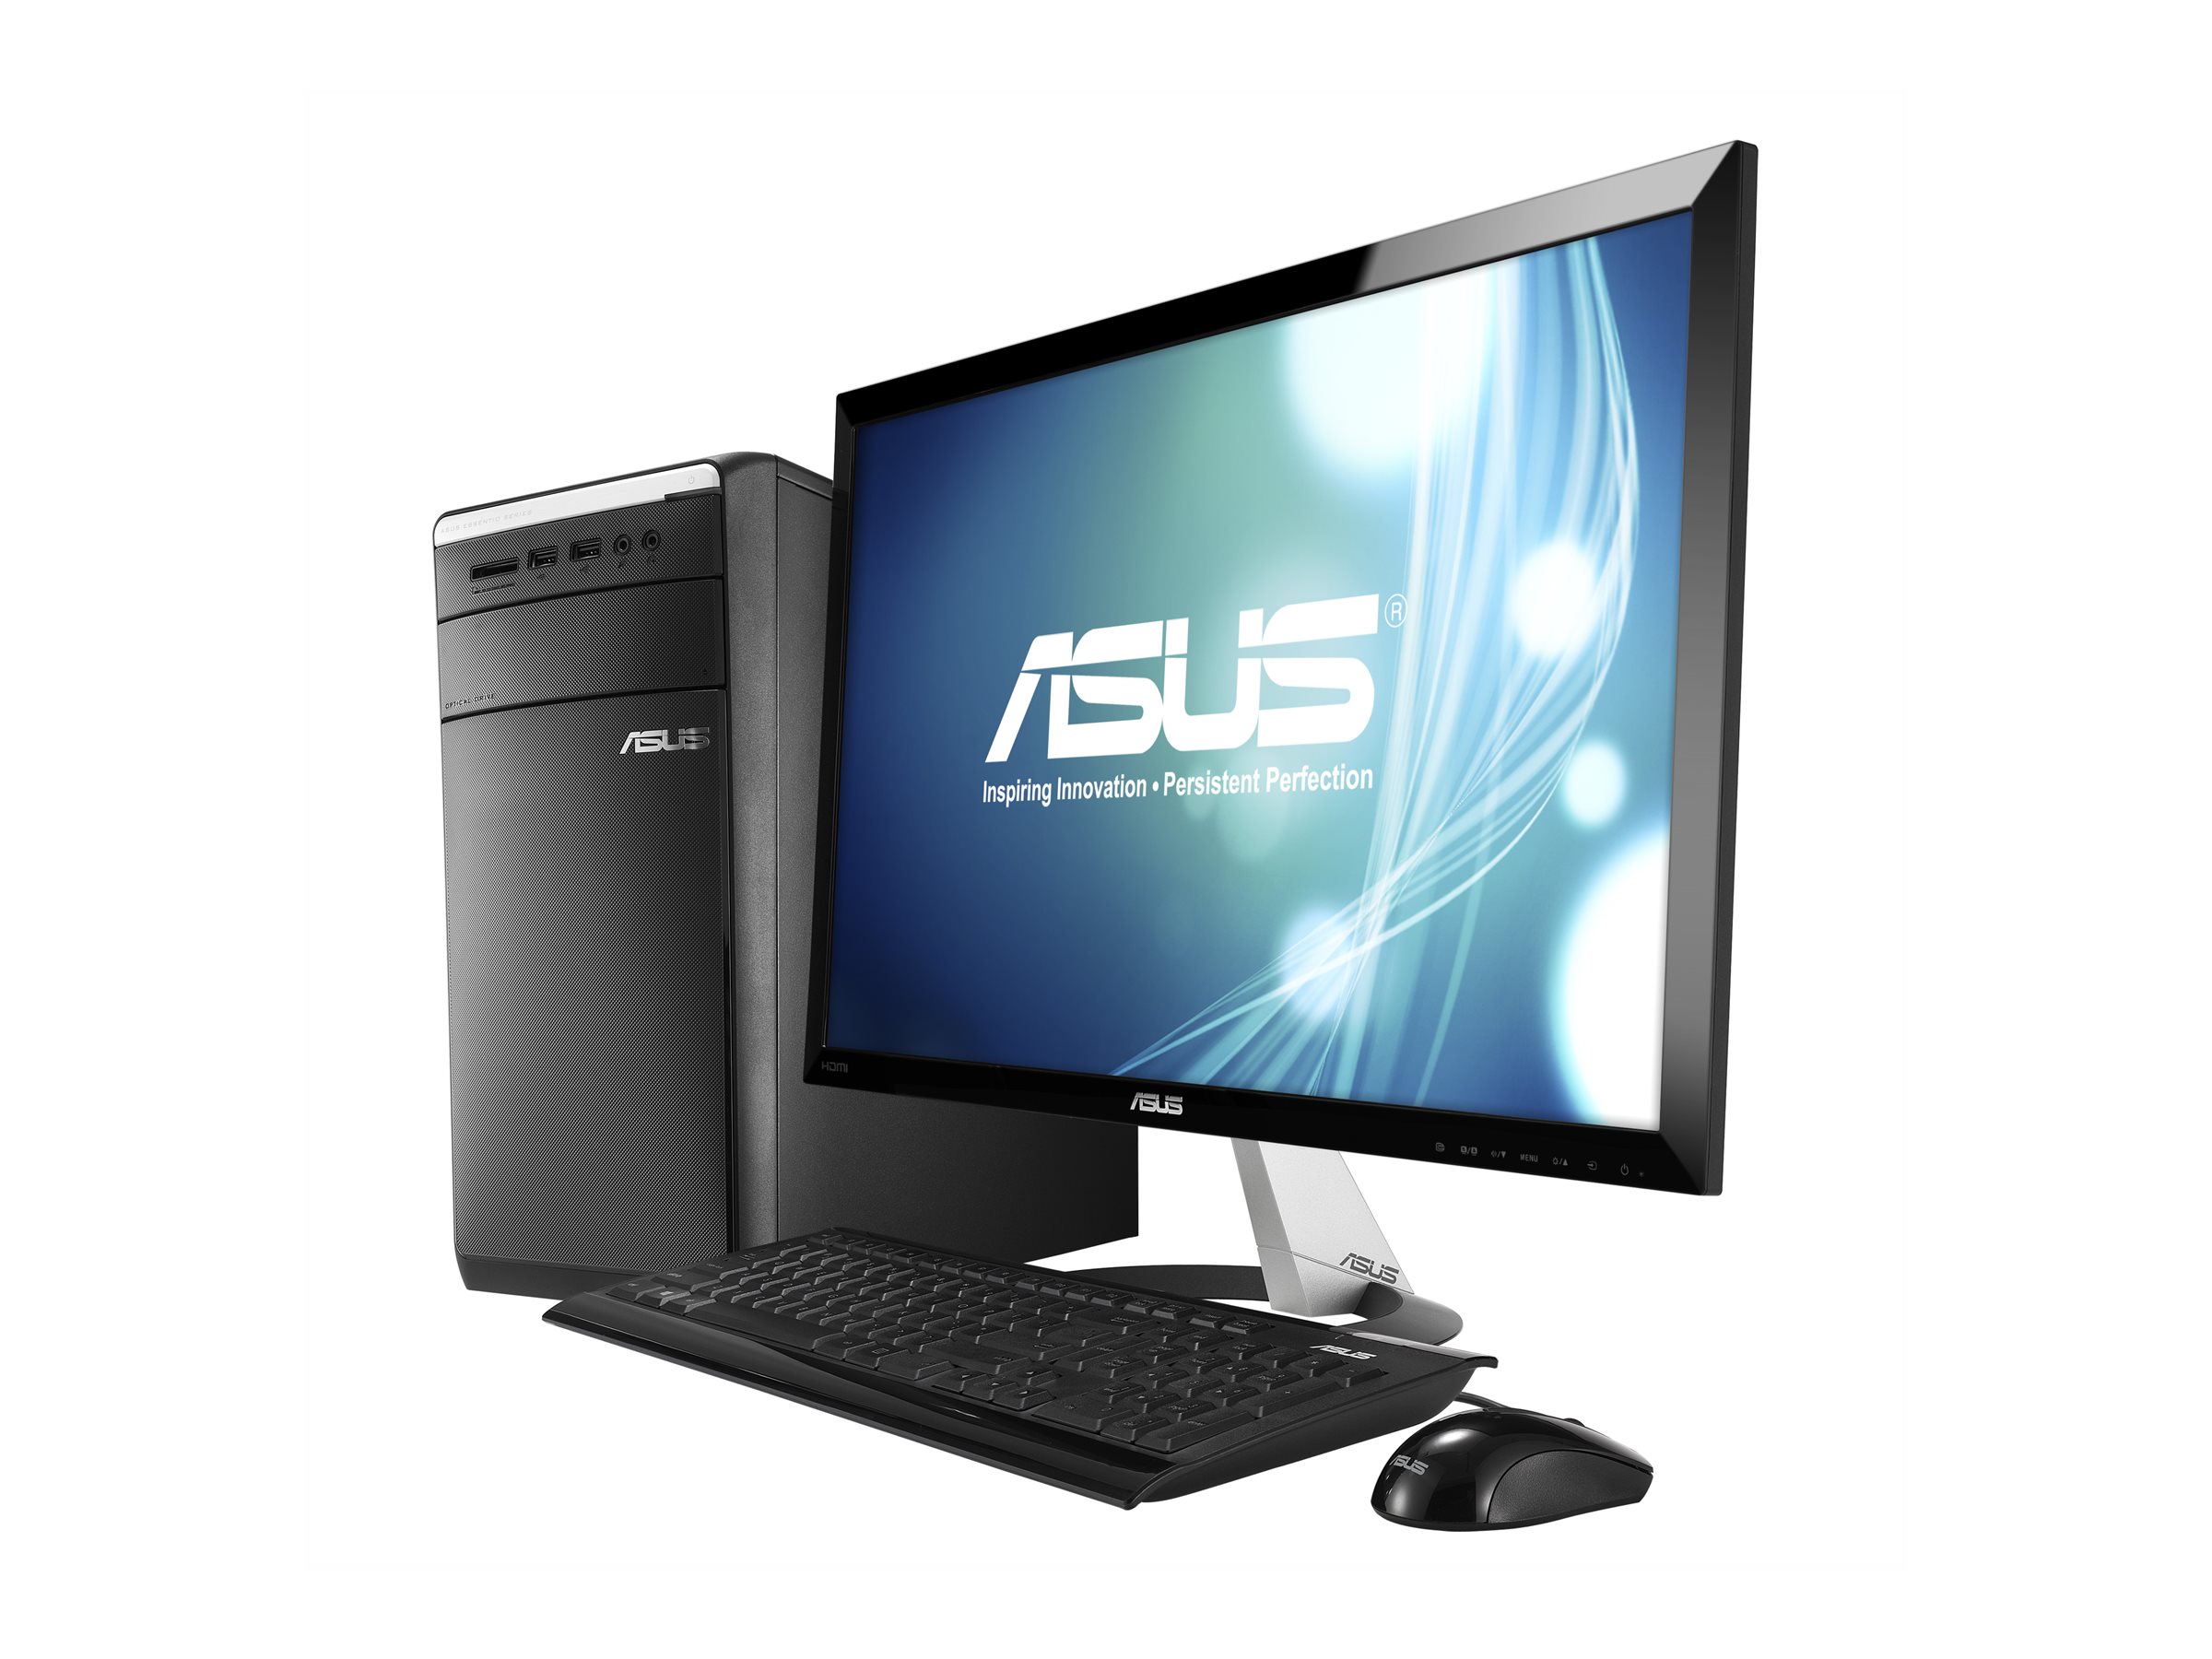 Asustek computer. Компьютер ASUS v241eak. ПК асус 2014. Desktop PC ASUS s300ma. Комп асус 3260.